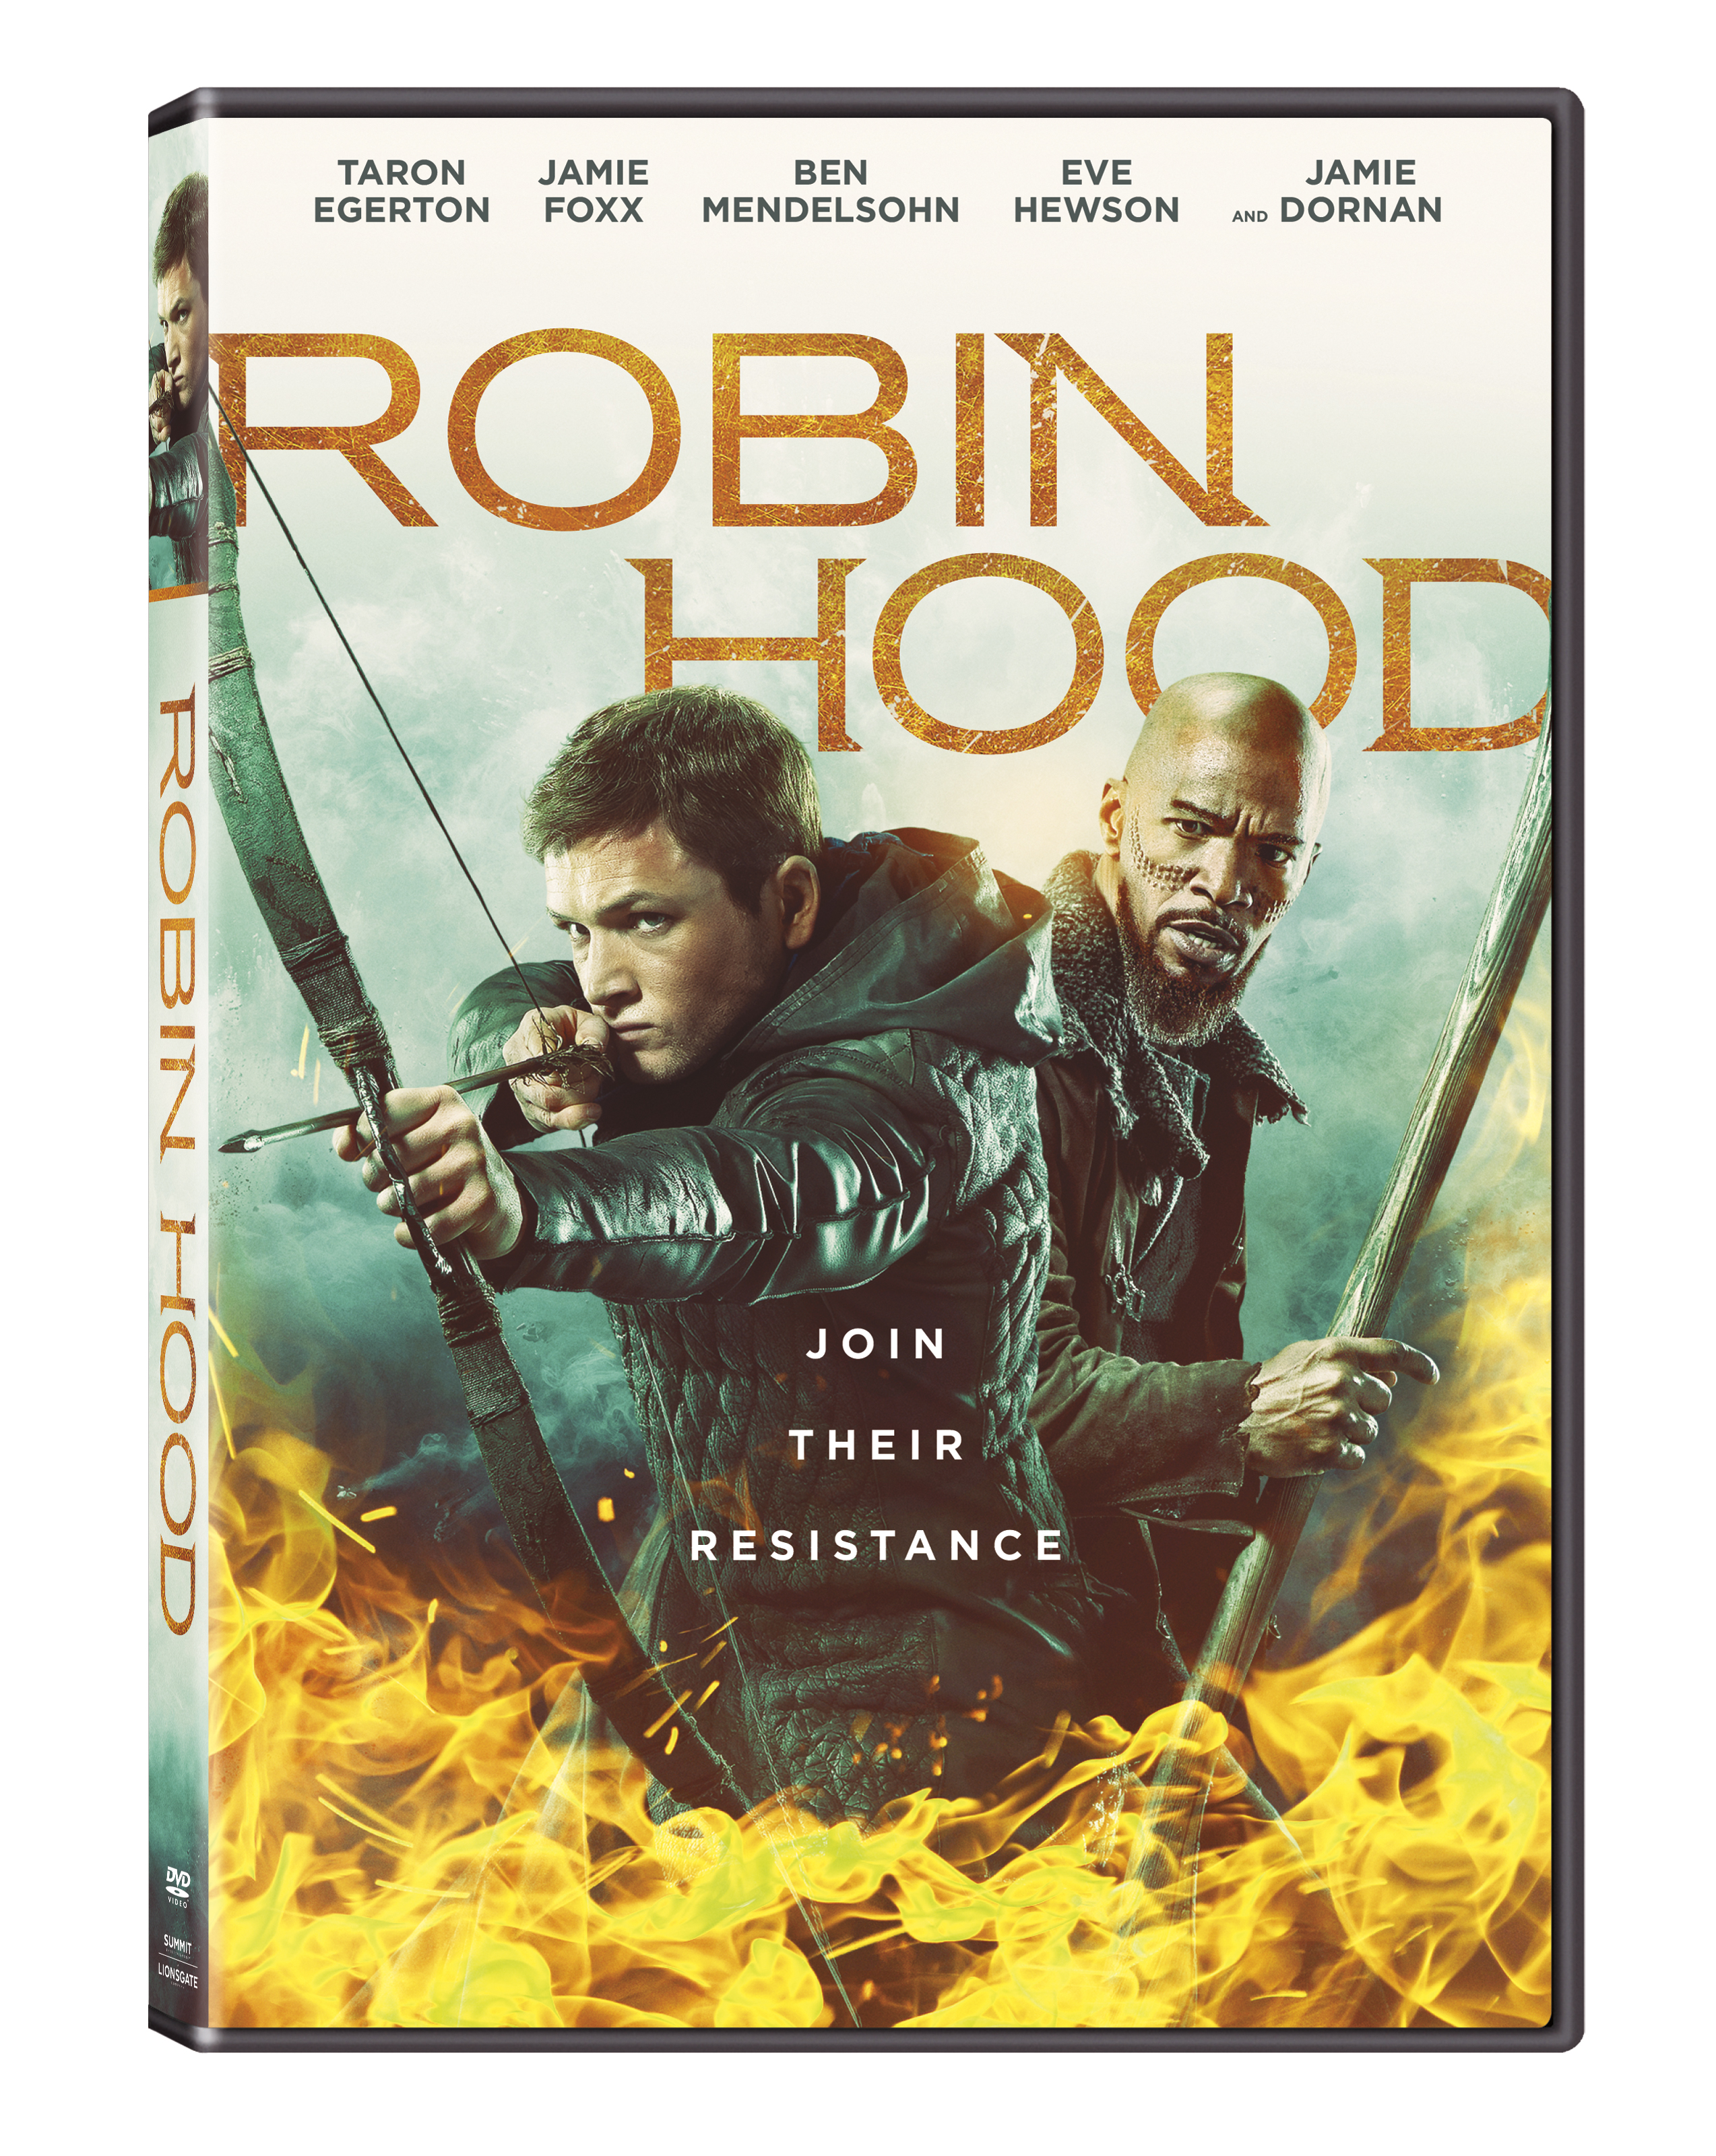 Robin Hood DVD cover (Lionsgate Home Entertainment)